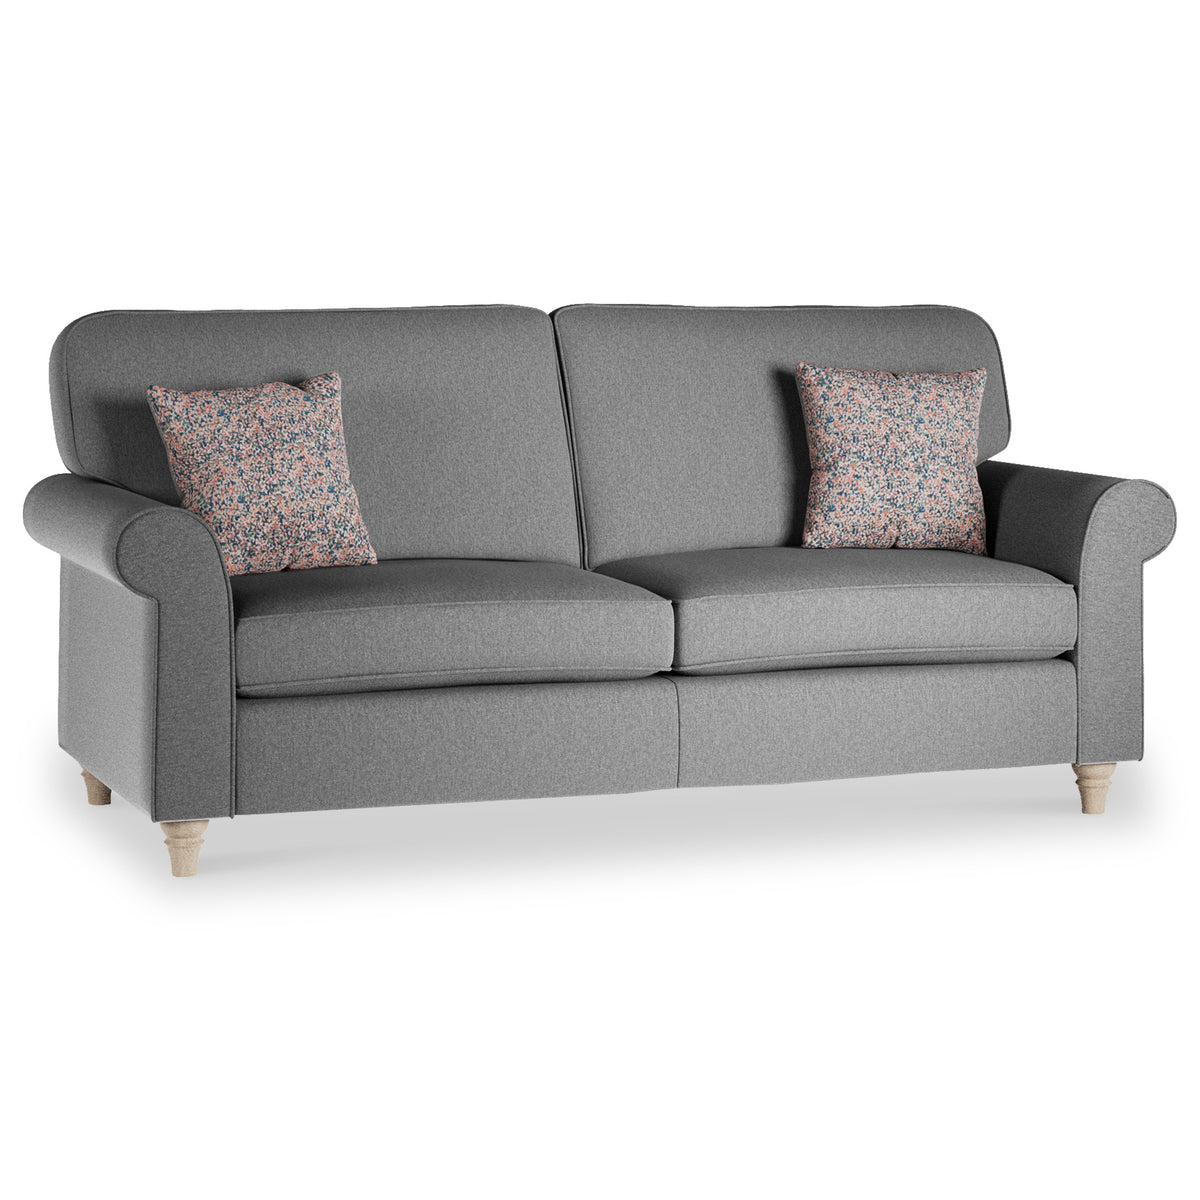 Thomas Grey 3 Seater Sofa from Roseland Furniture